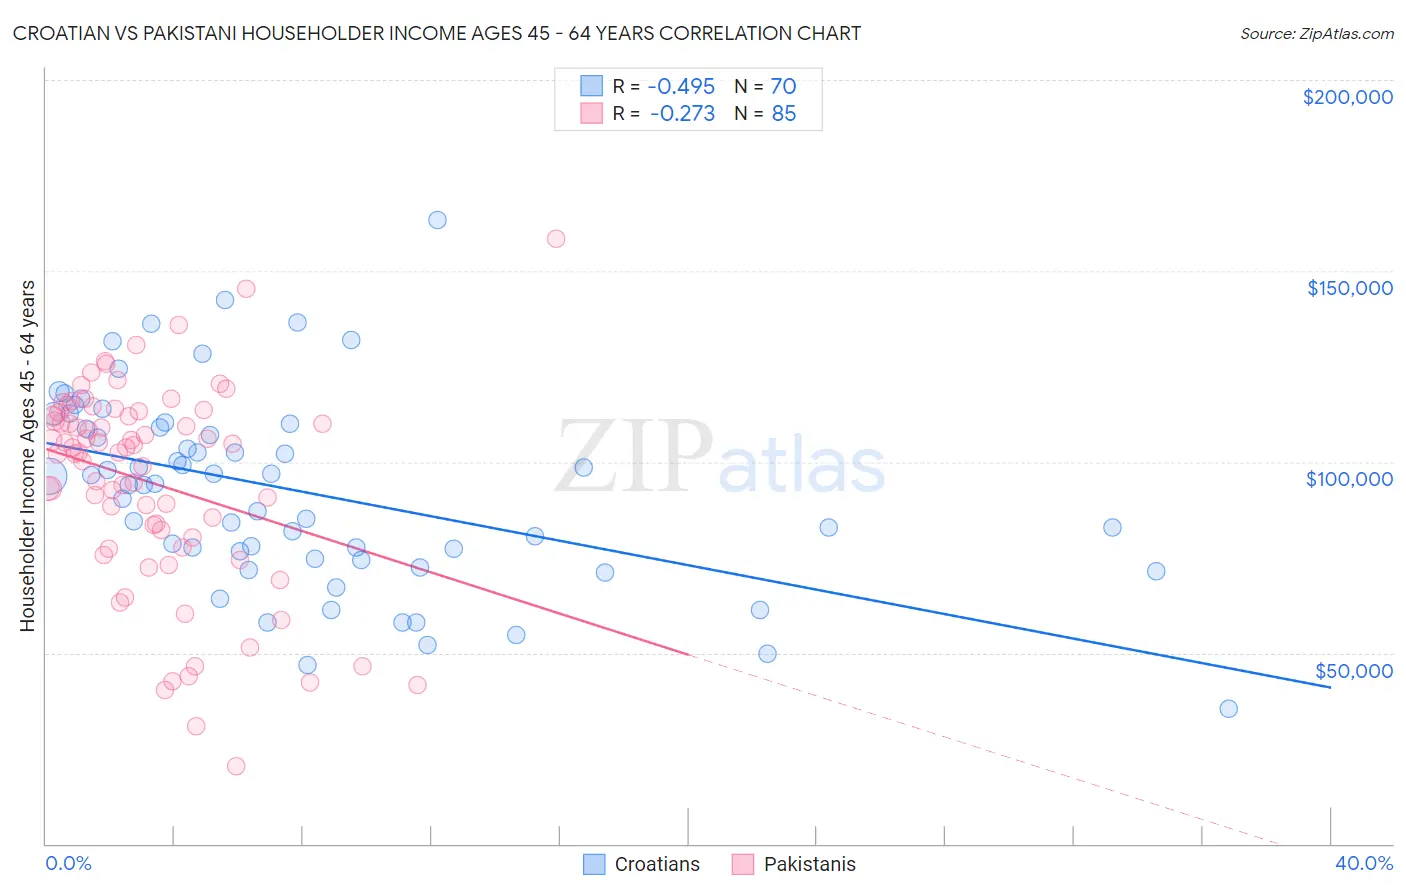 Croatian vs Pakistani Householder Income Ages 45 - 64 years